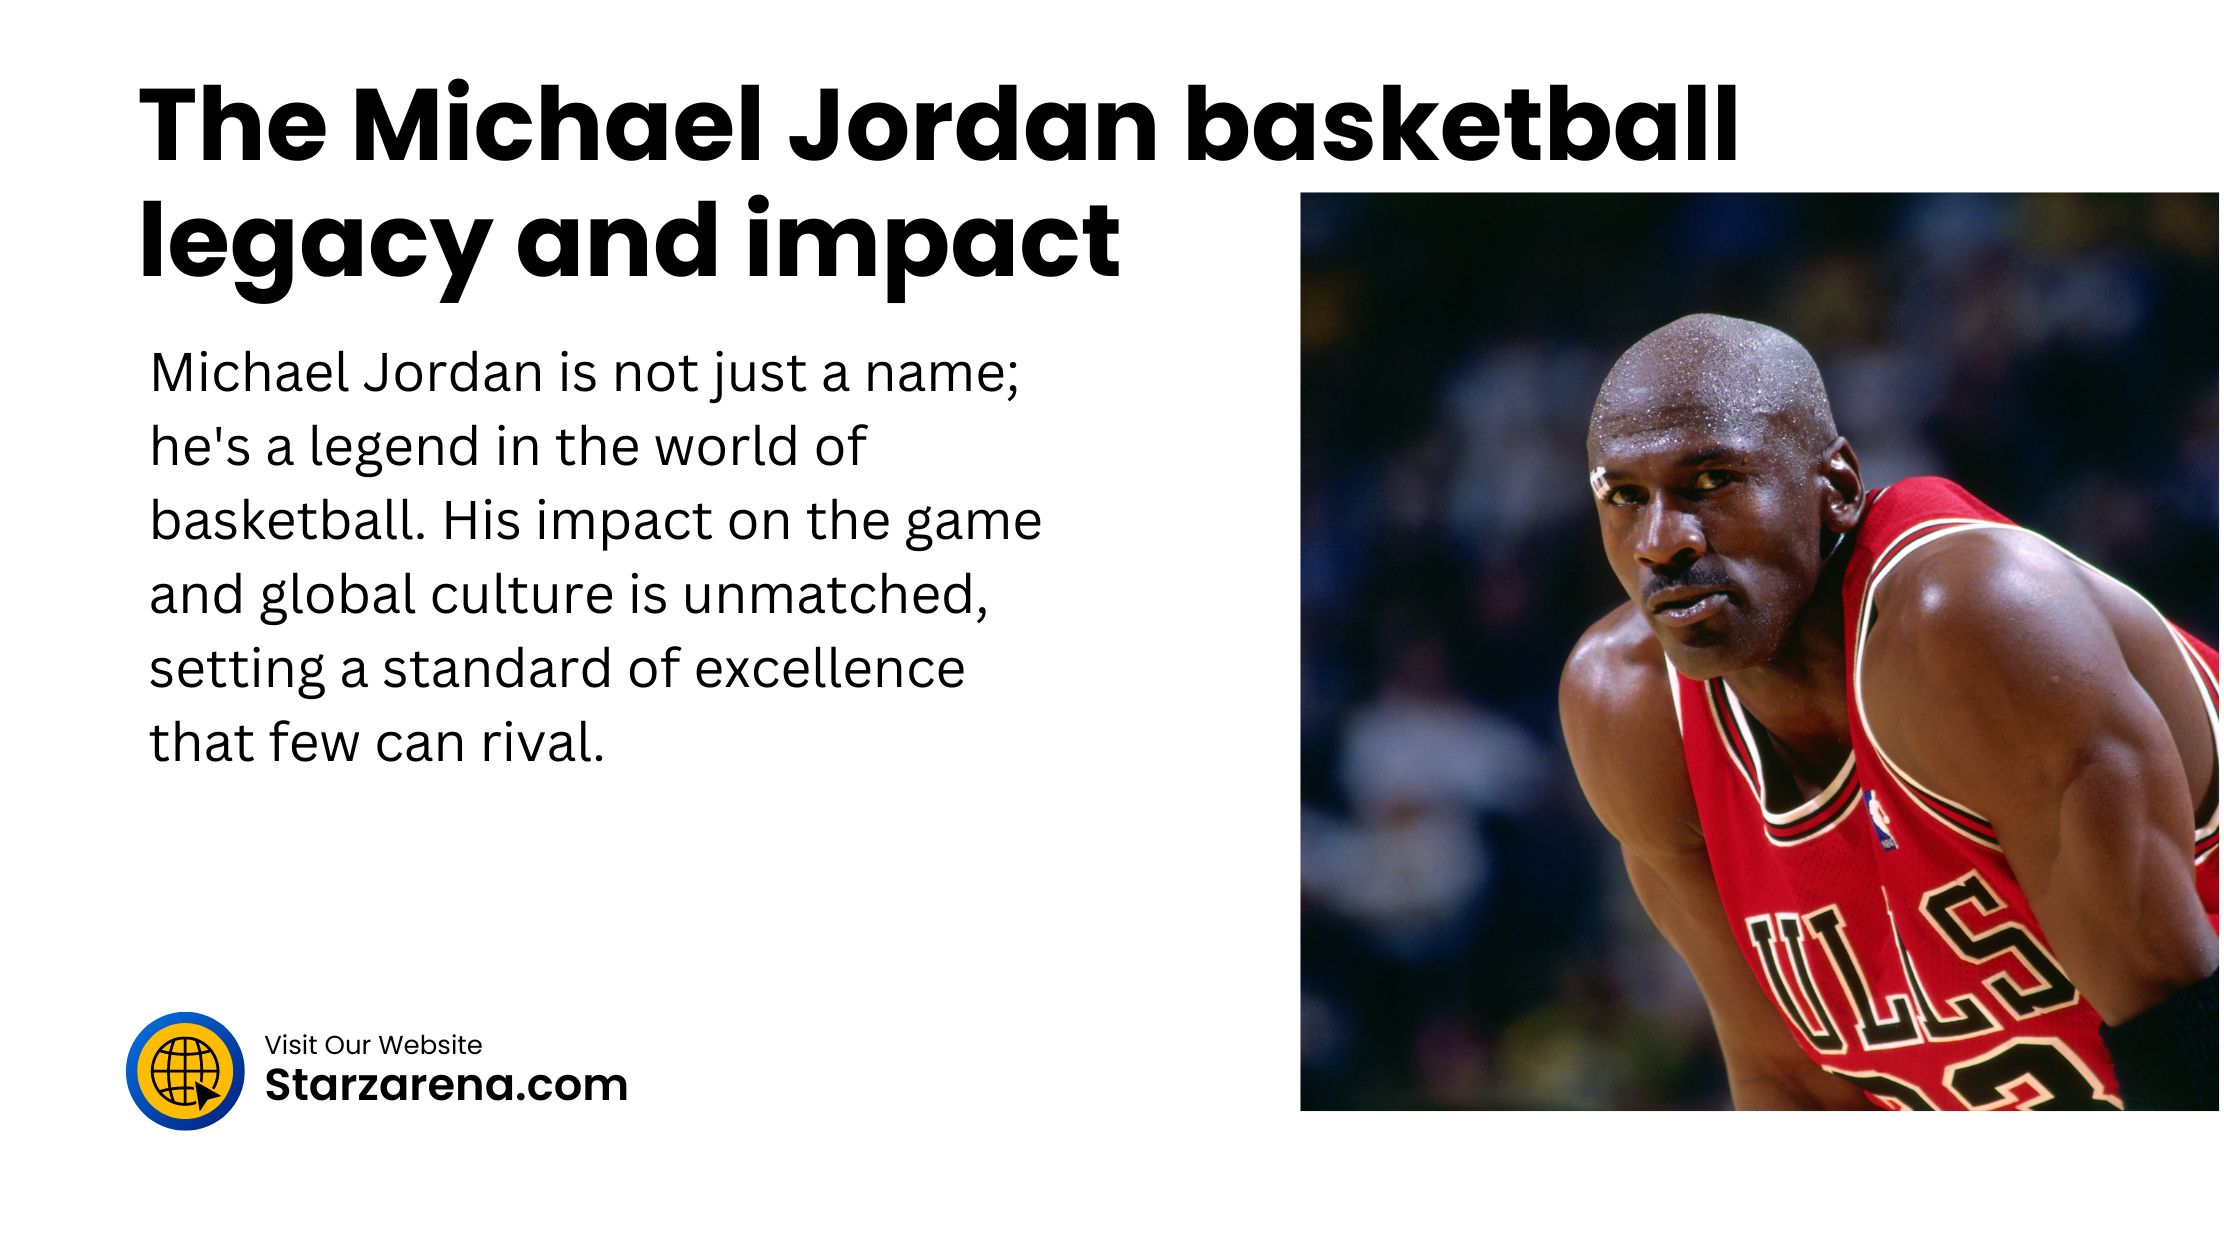 The Michael Jordan basketball legacy and impact